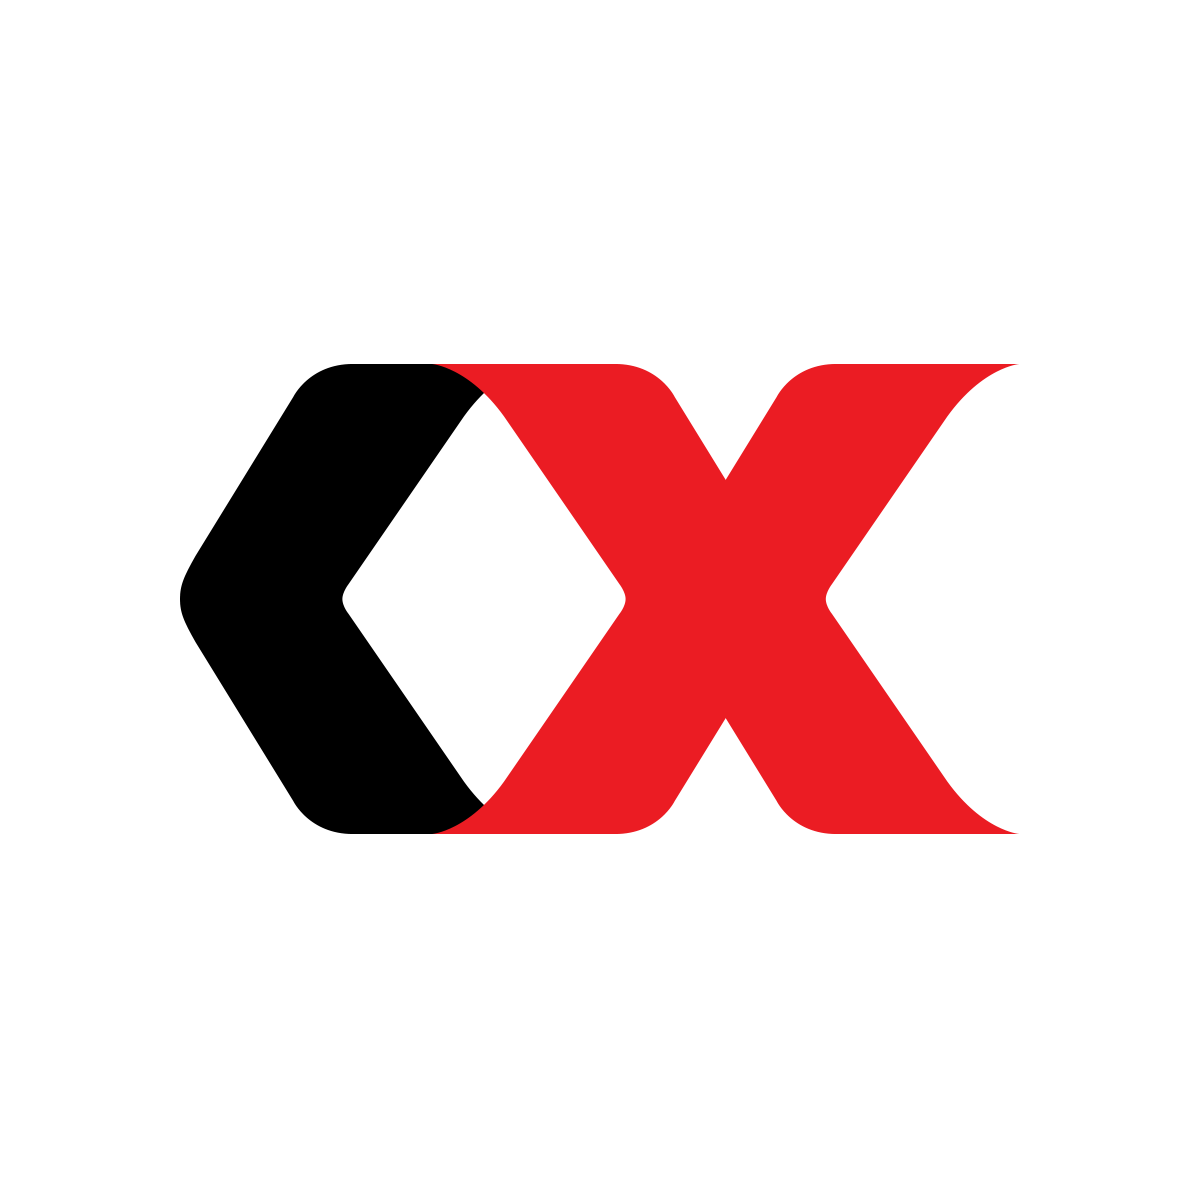 KX Technology Group